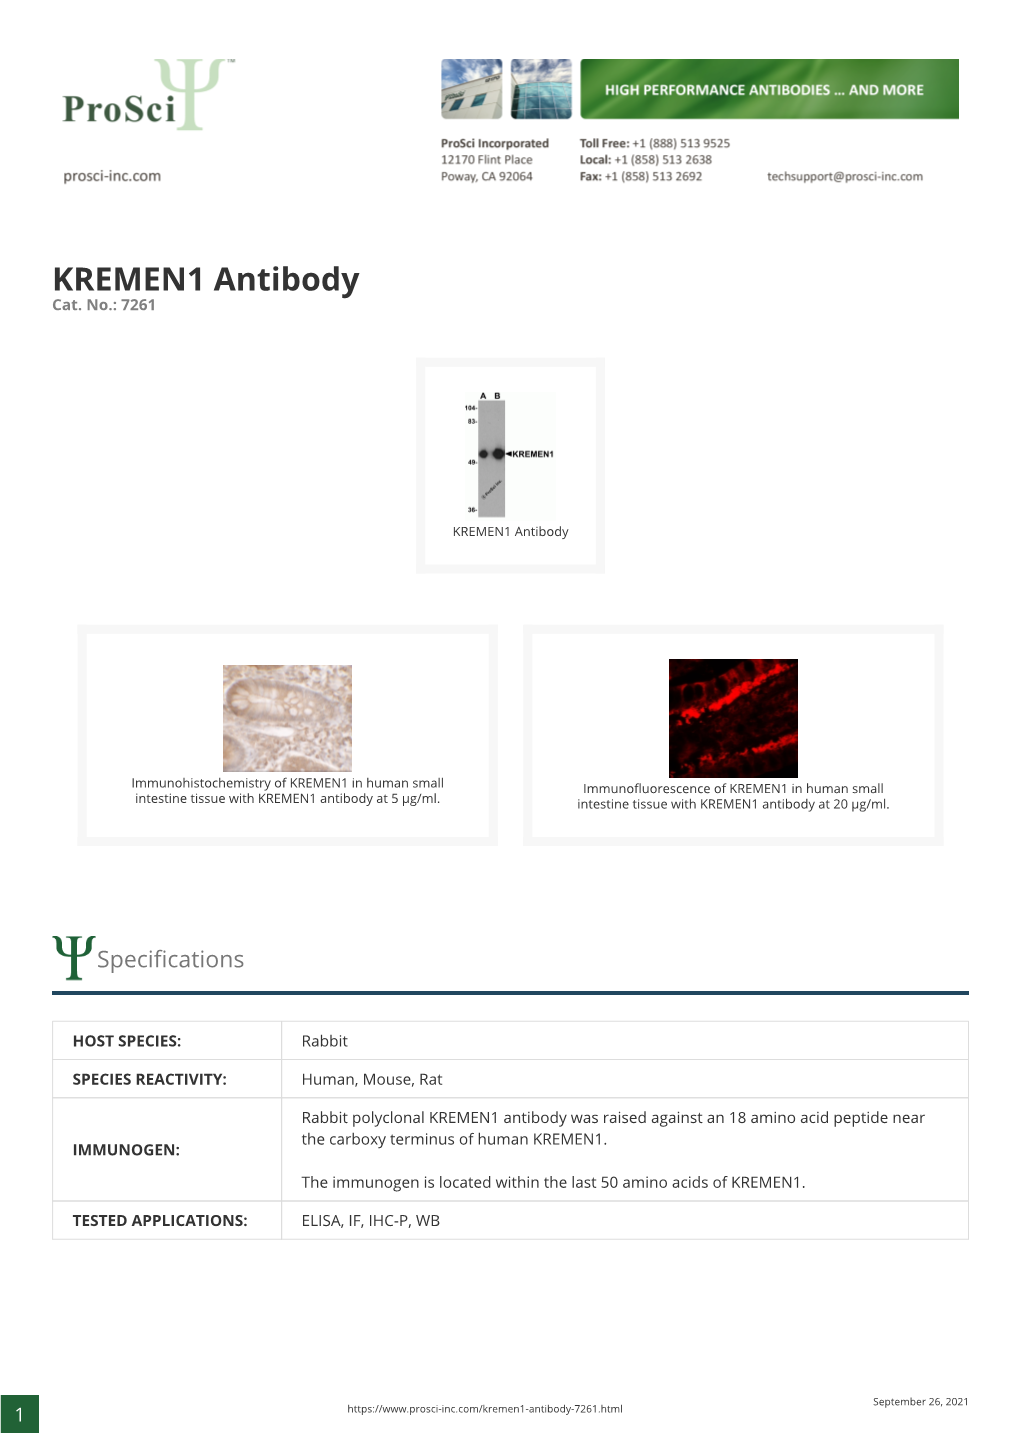 KREMEN1 Antibody Cat